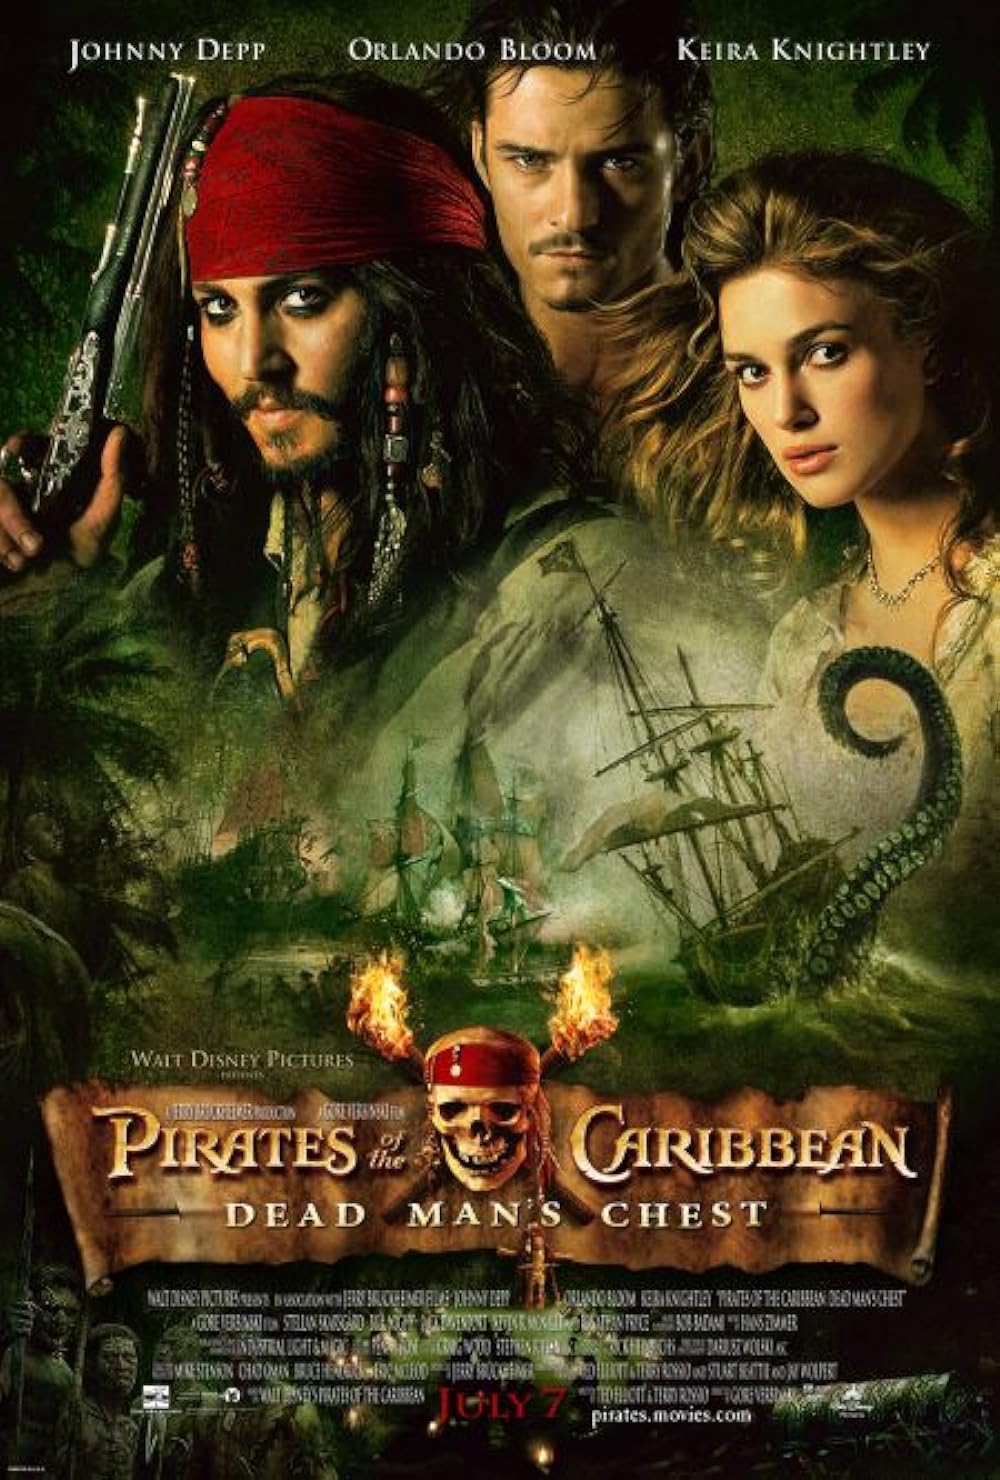 bonnie jean bailey add photo pirates of caribbean full movie online